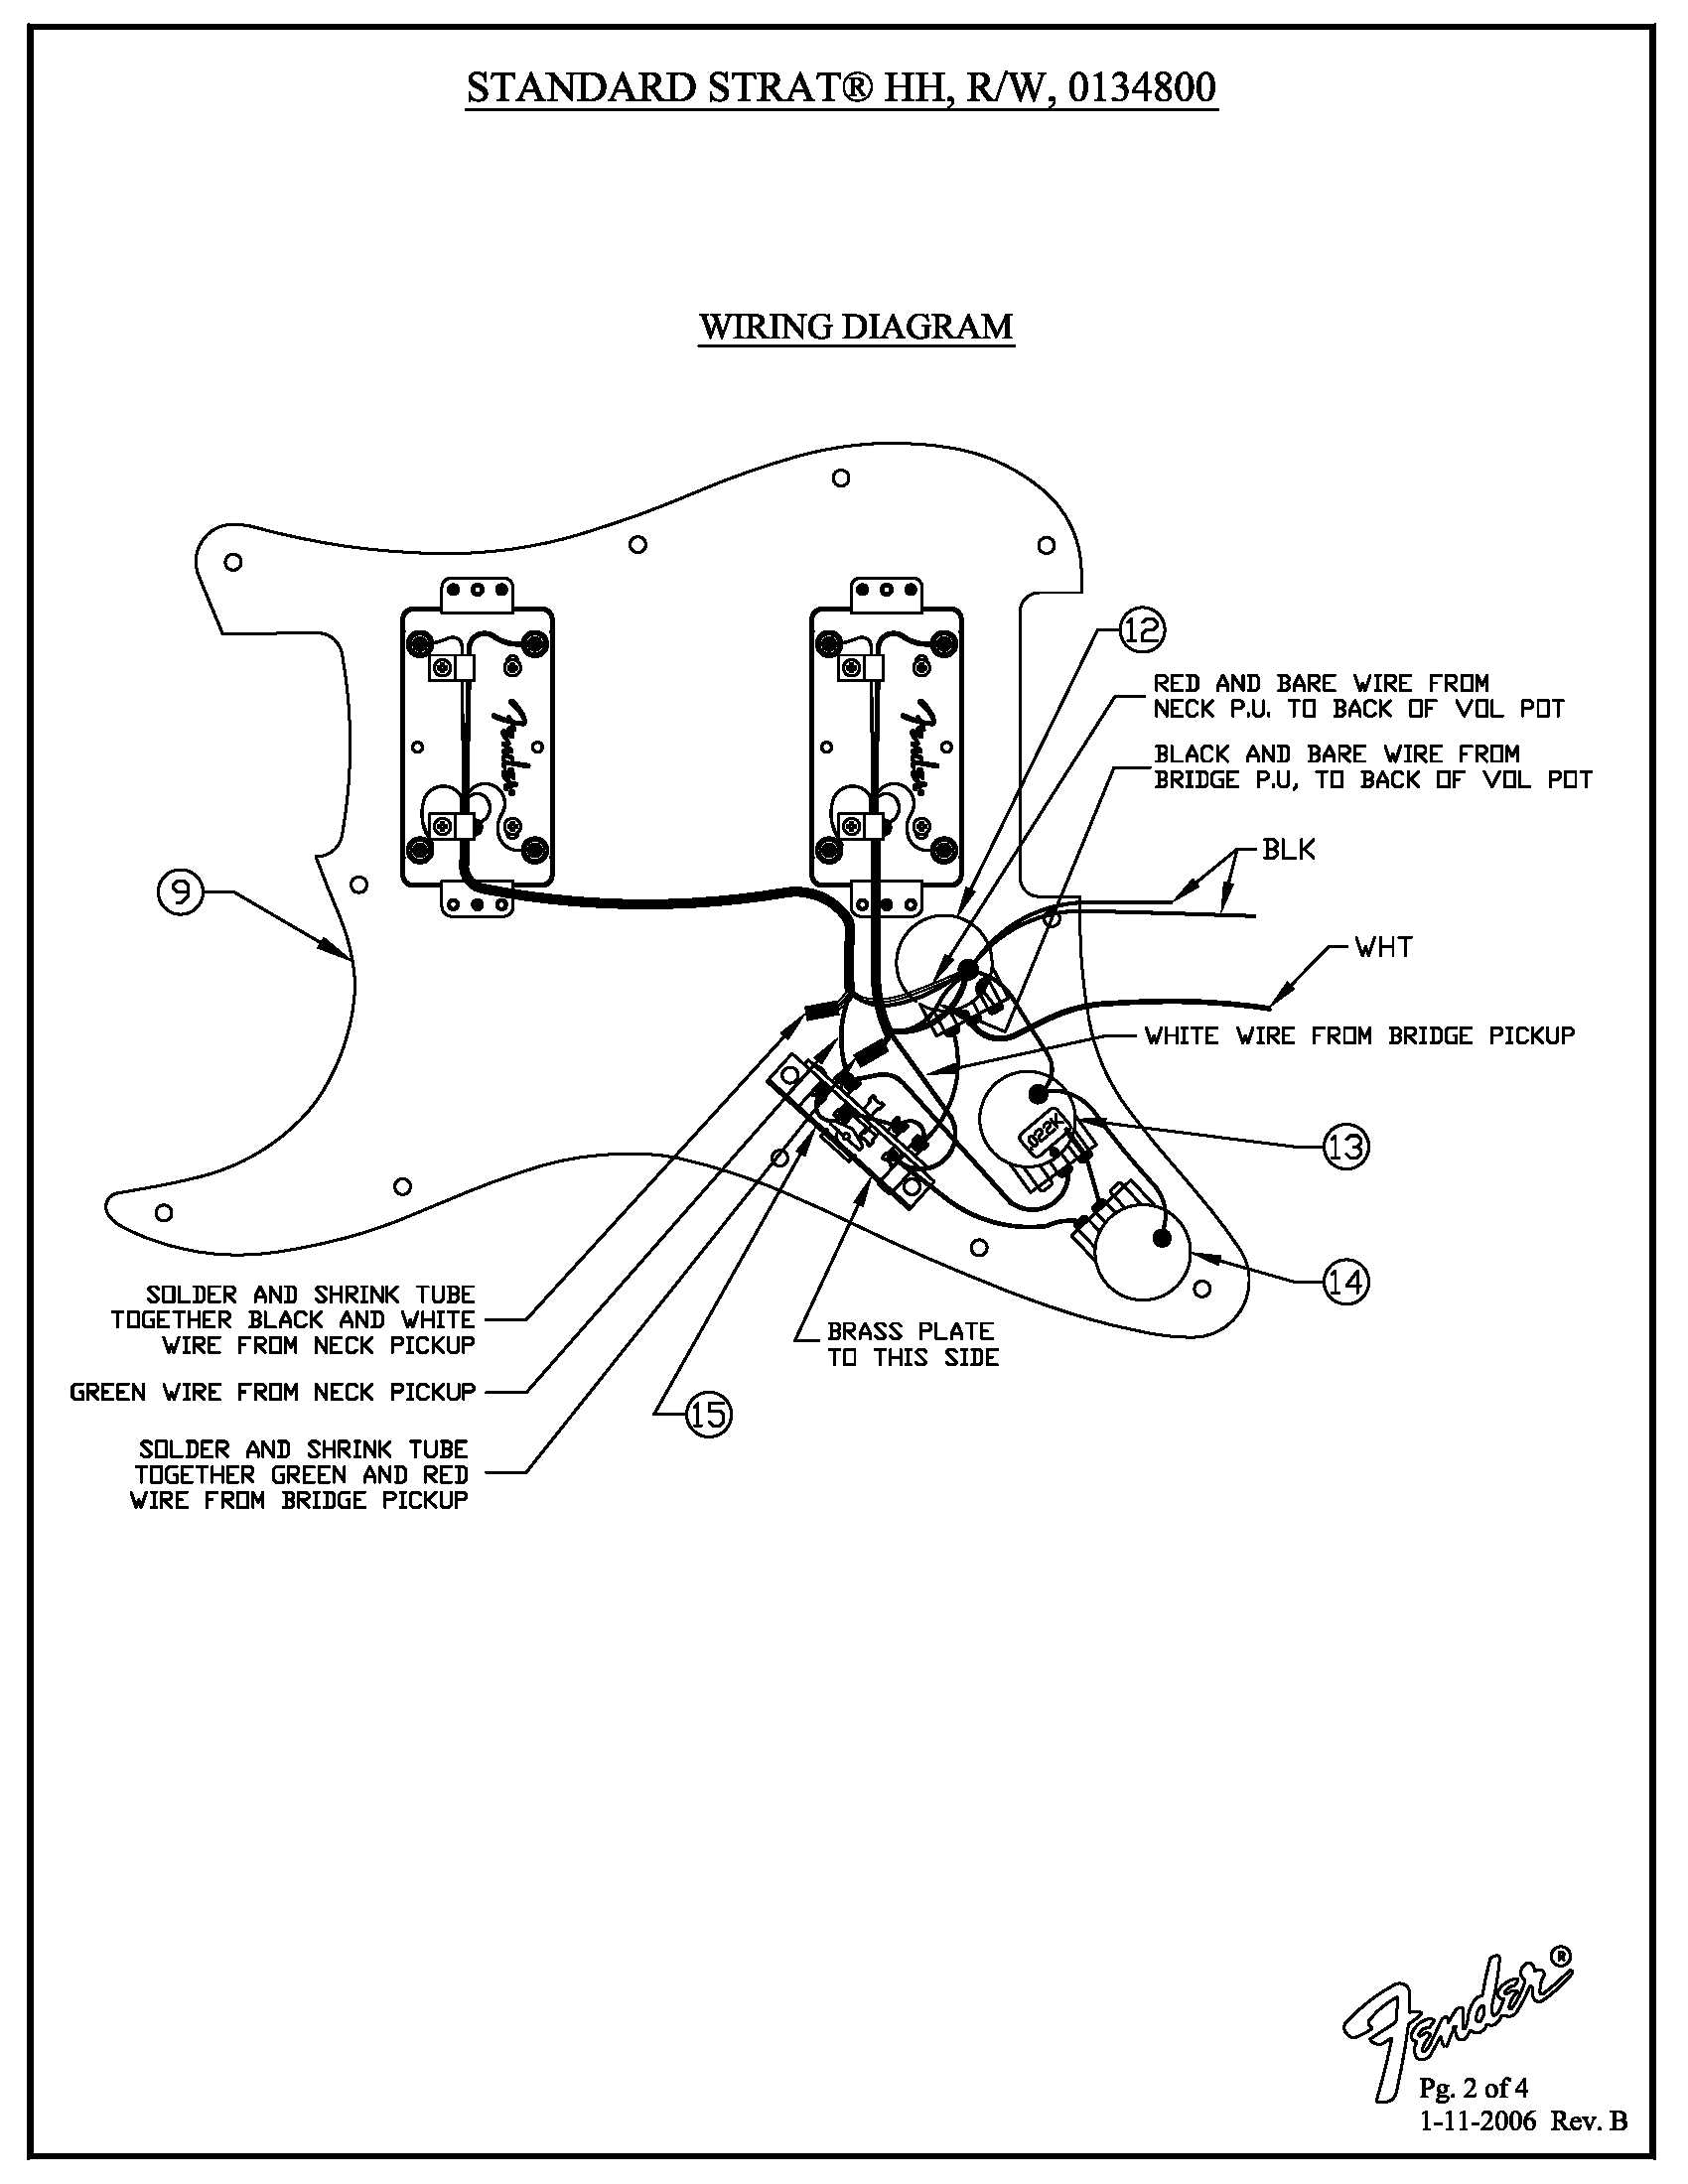 Standard Stratocaster Hh Wiring Diagram 0134800 · Customer Self Service